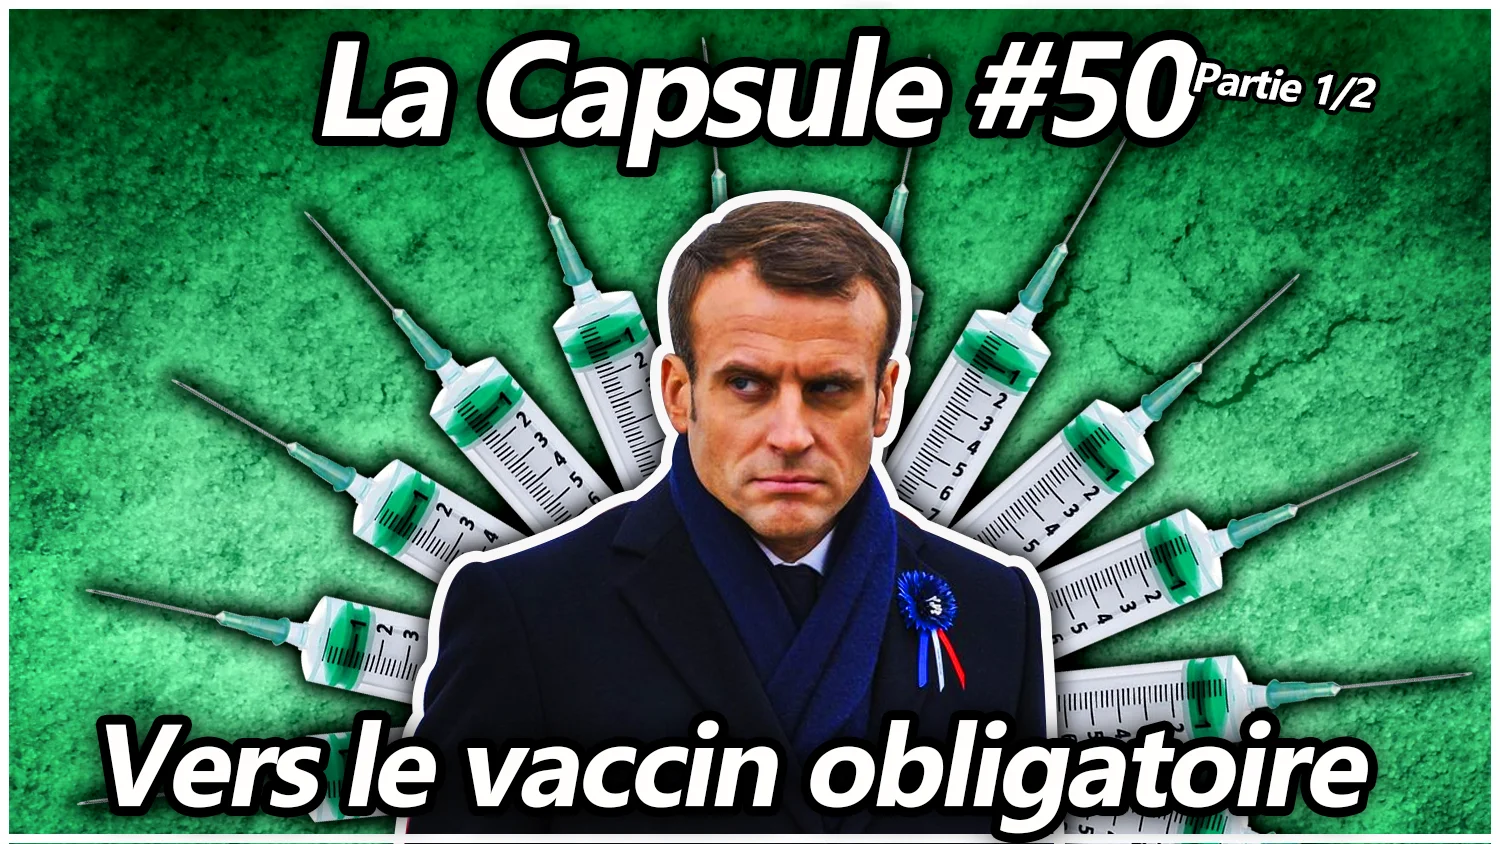 La Capsule #50 (1/2) – Vers le vaccin obligatoire